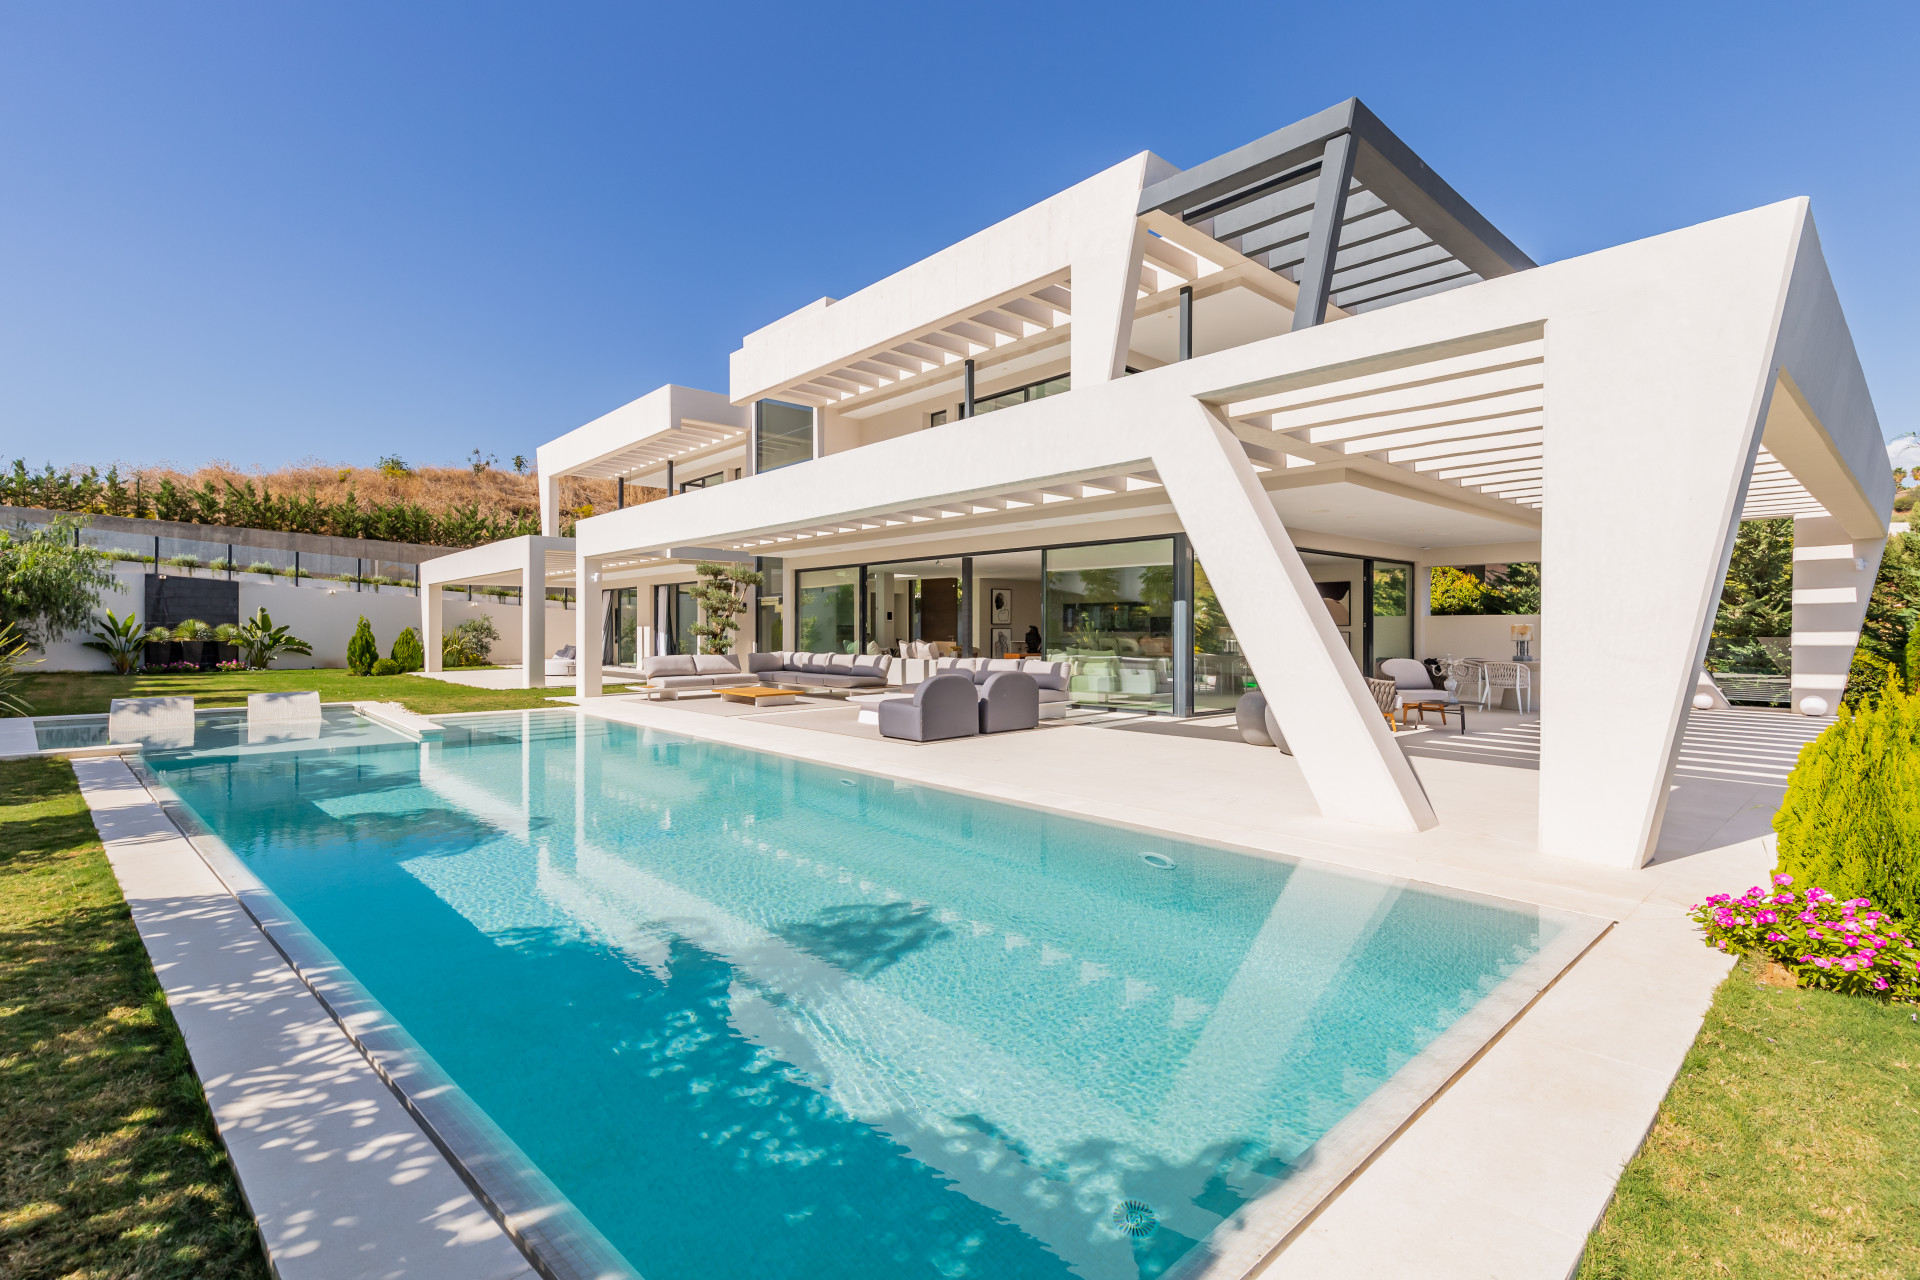 A superb contemporary 6 bedroom villa in Nueva Andalucia, close to all amenities and close to Los Naranjos Golf Club.